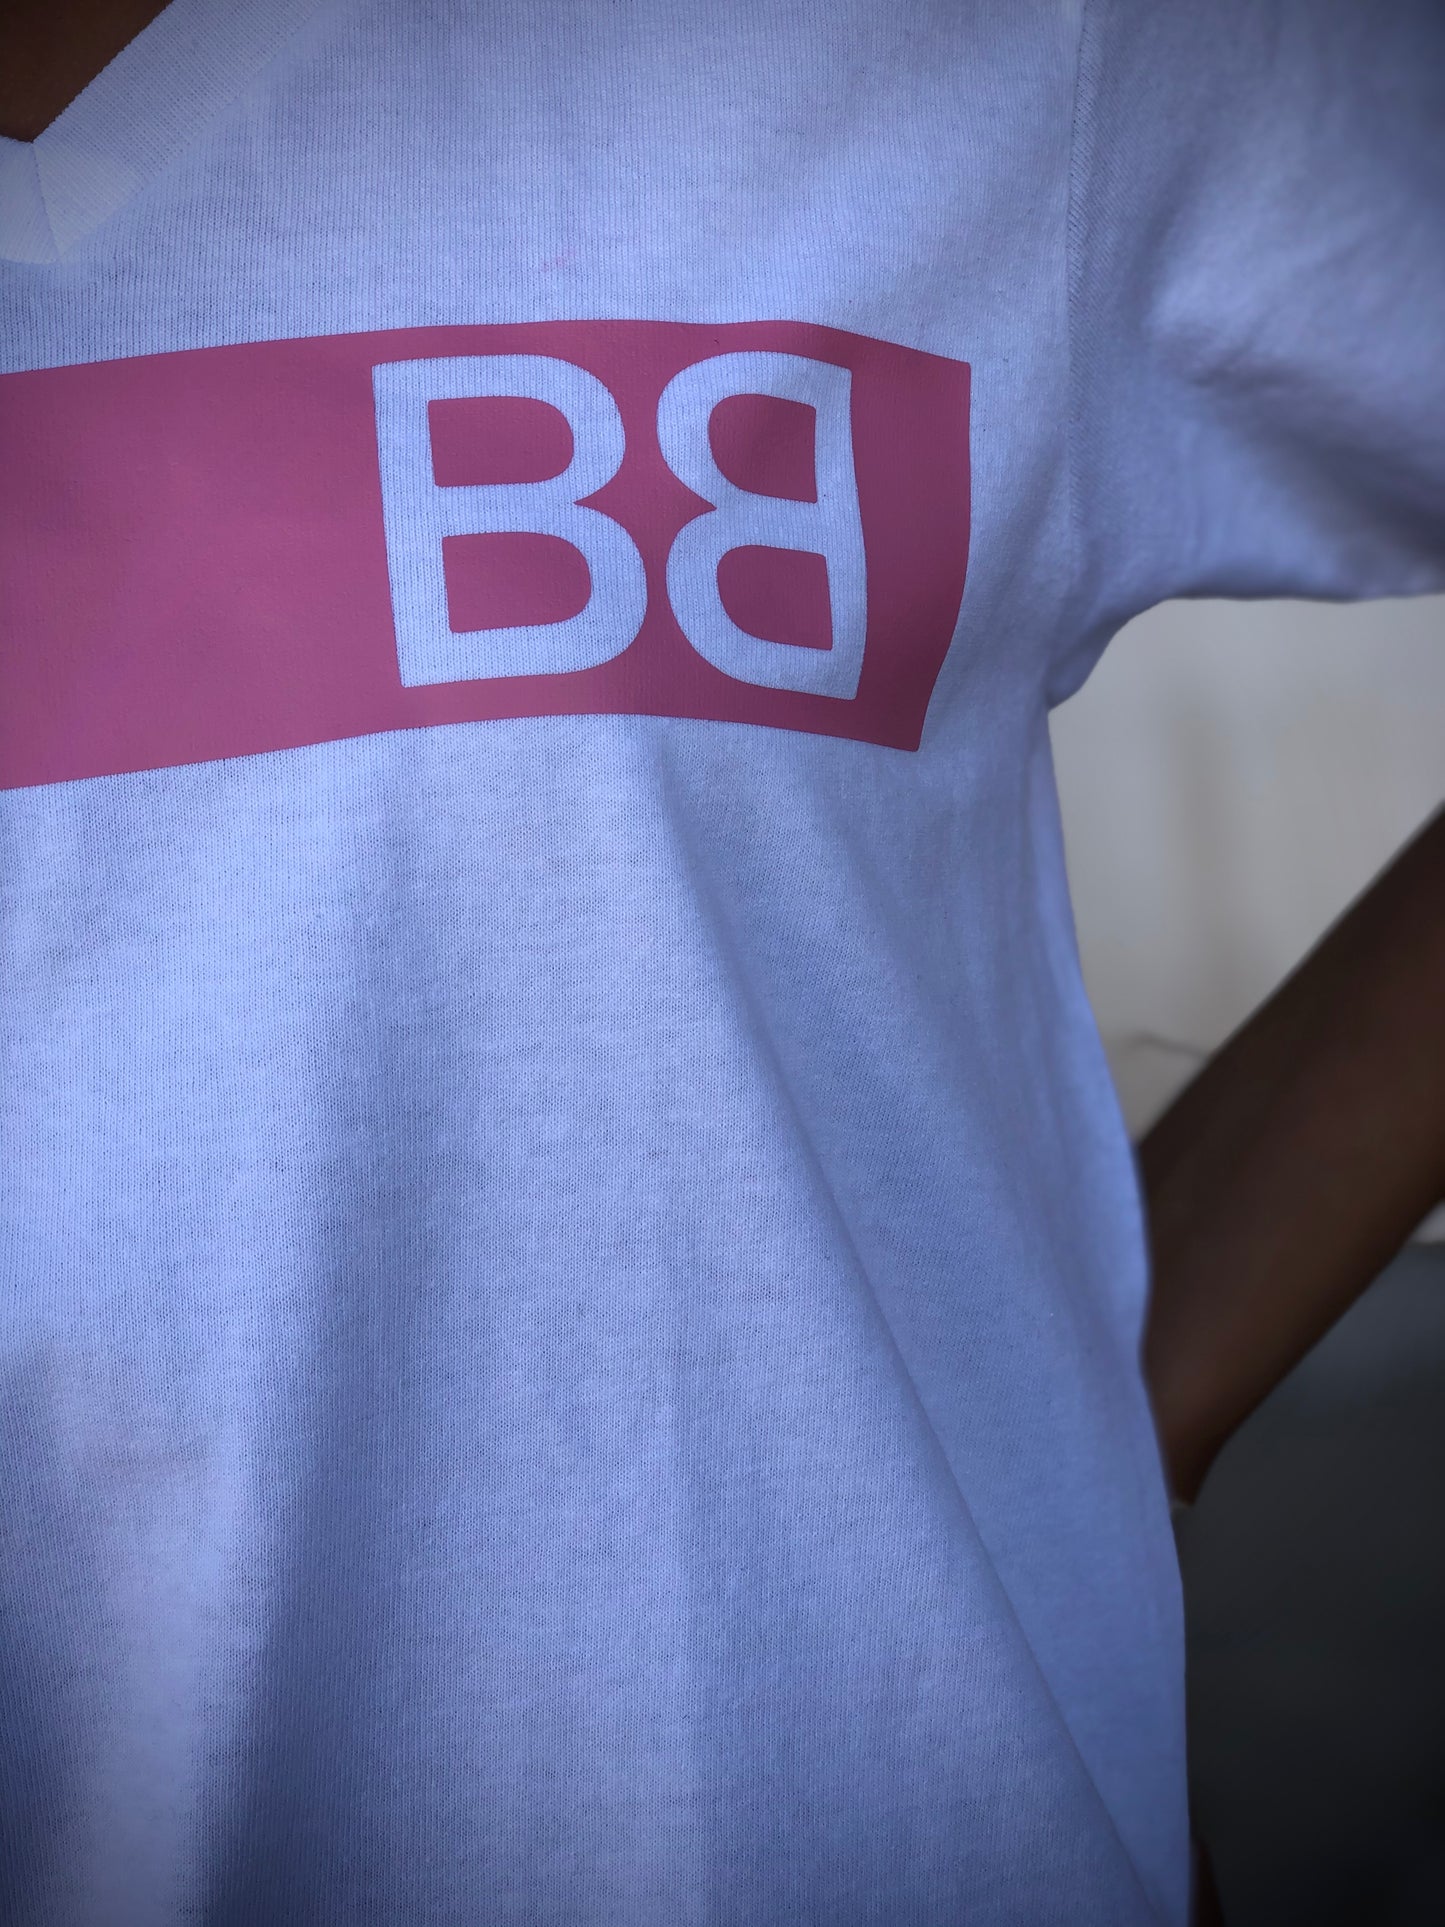 BB pink edition shirt